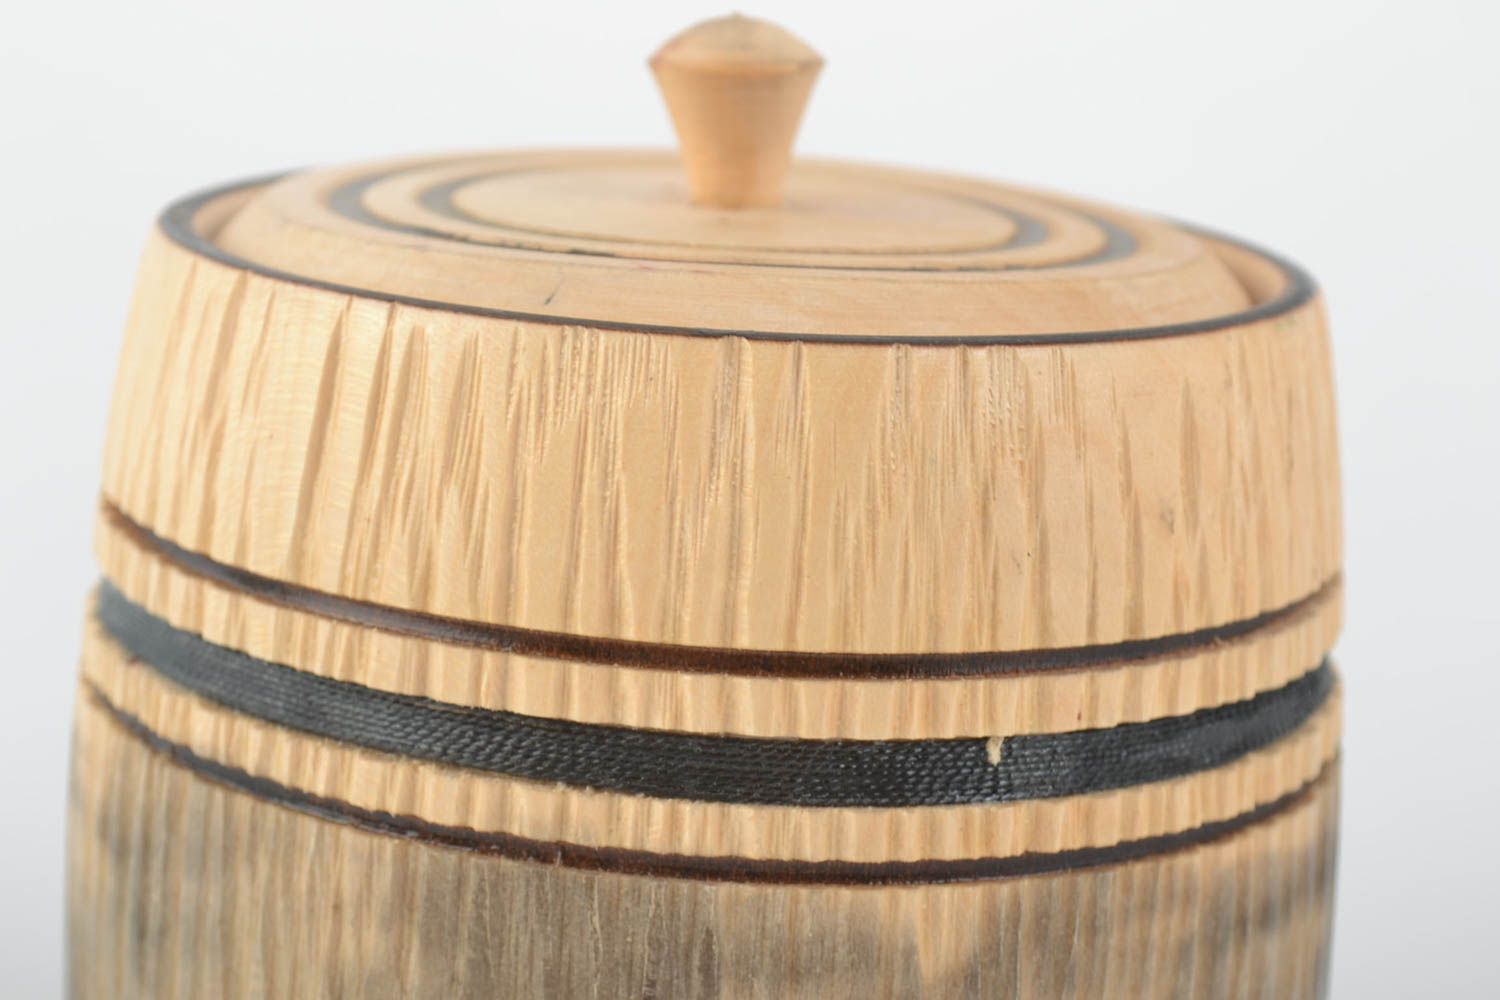 Handmade wooden barrel unusual designer barrel kitchen accessory 700 ml photo 2